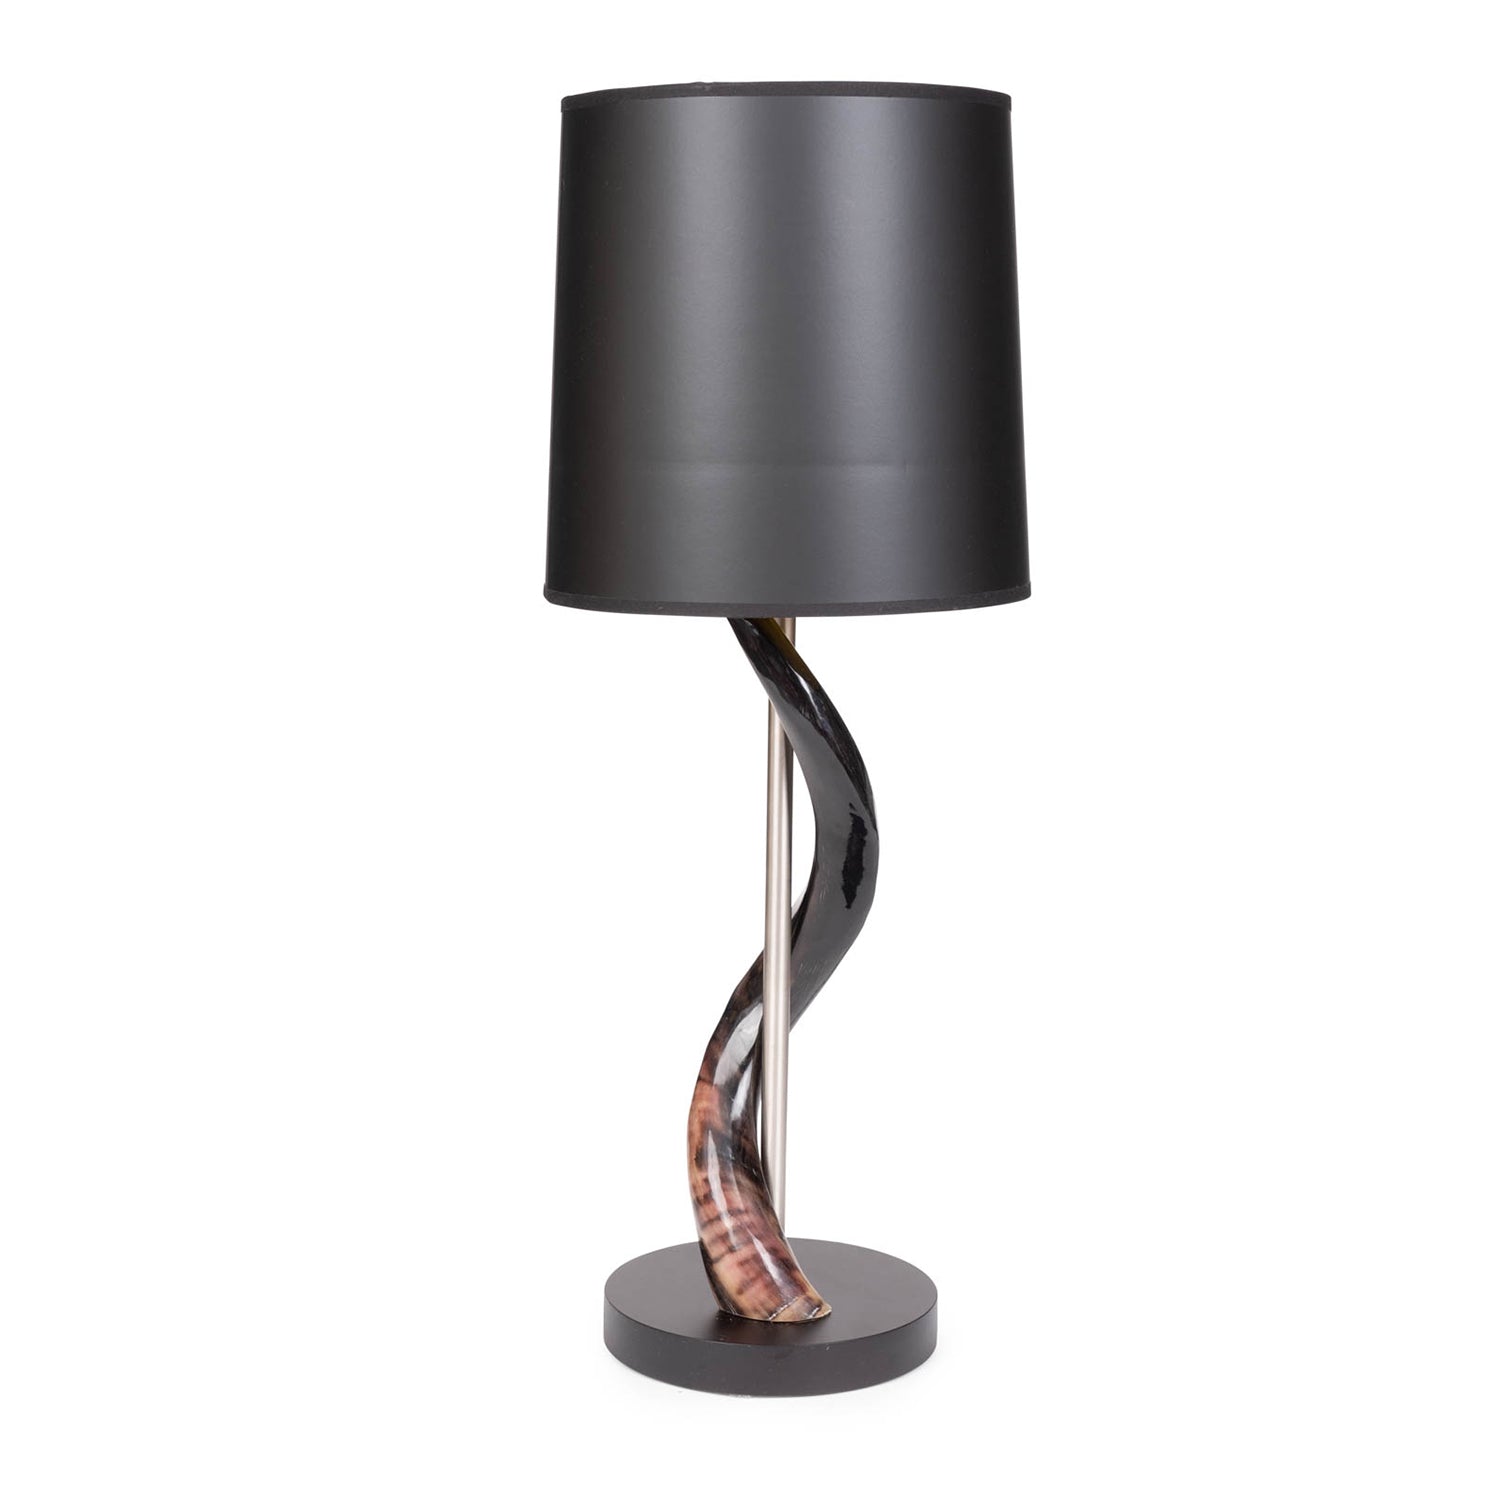 Polished Kudu Horn Table Lamp